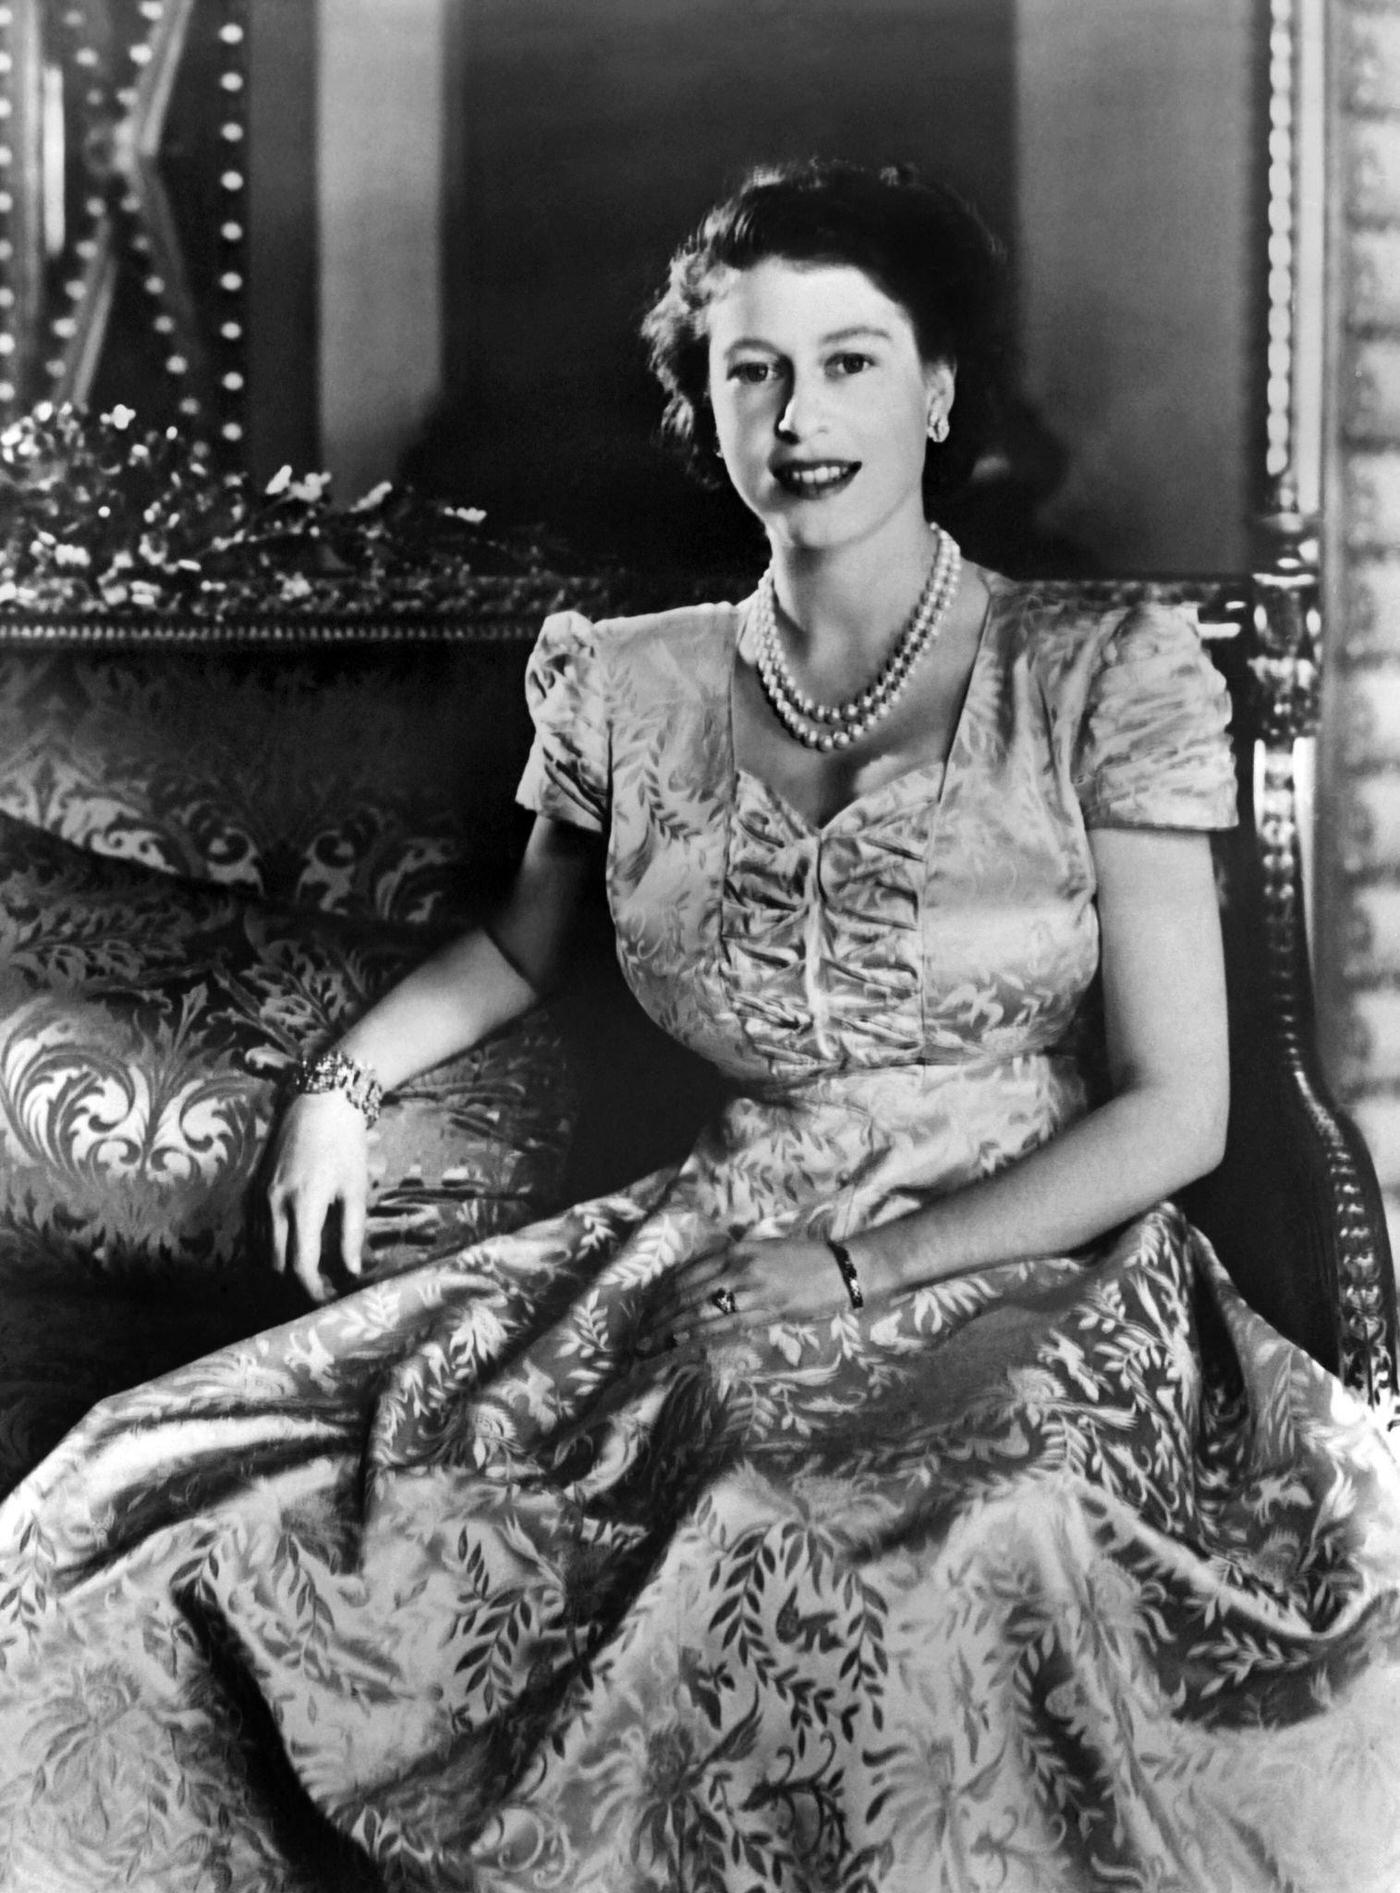 Princess Elizabeth of York posing in the 40s.